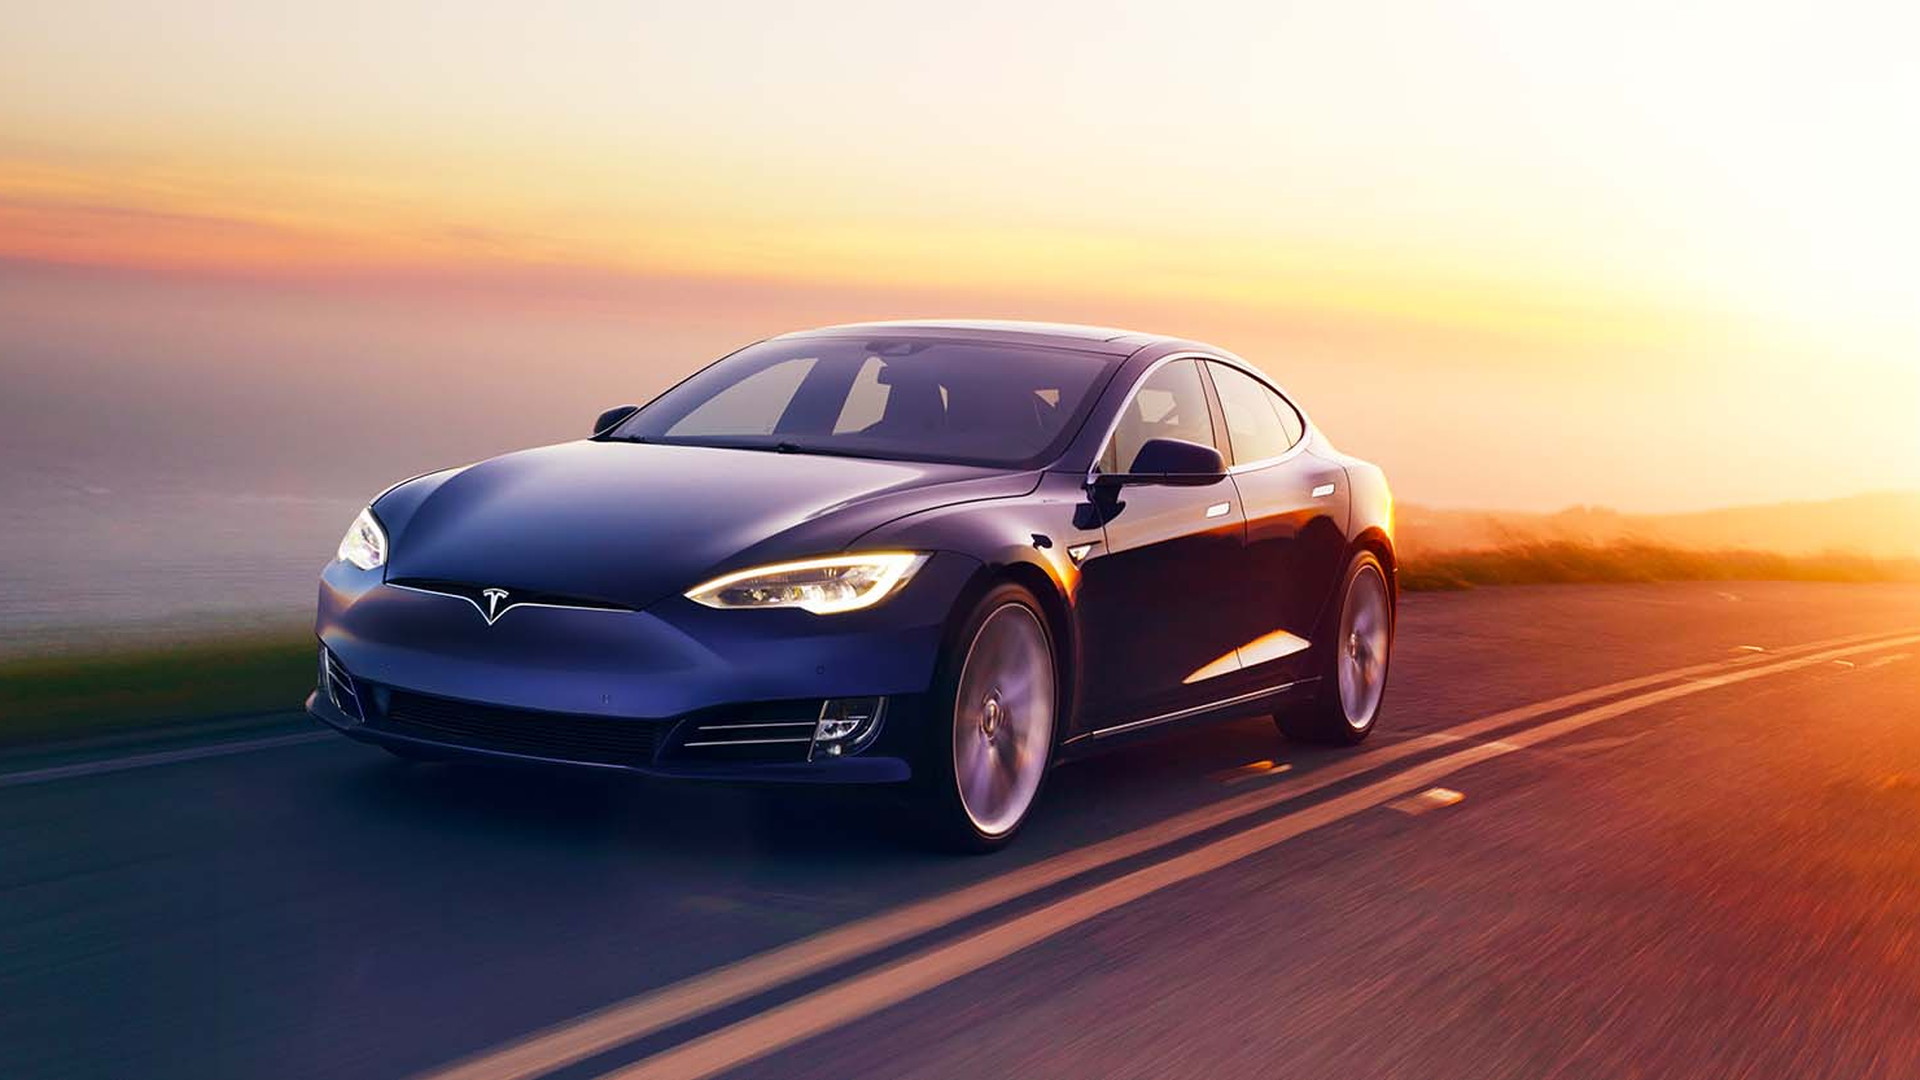 Tesla 'Ludicrous Plus' mode electric car even faster